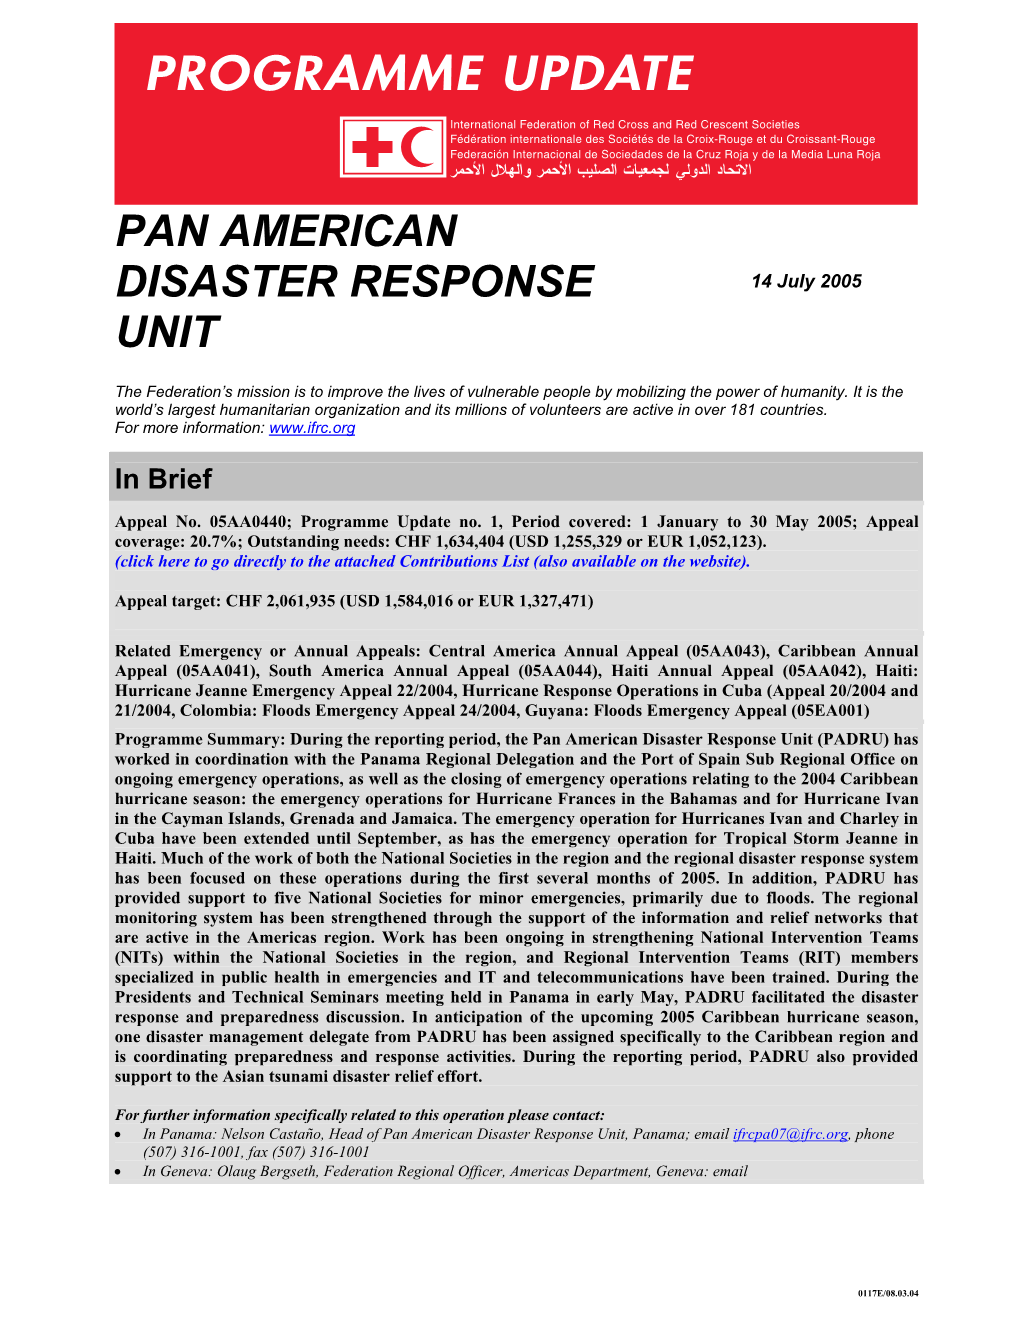 Pan American Disaster Response Unit